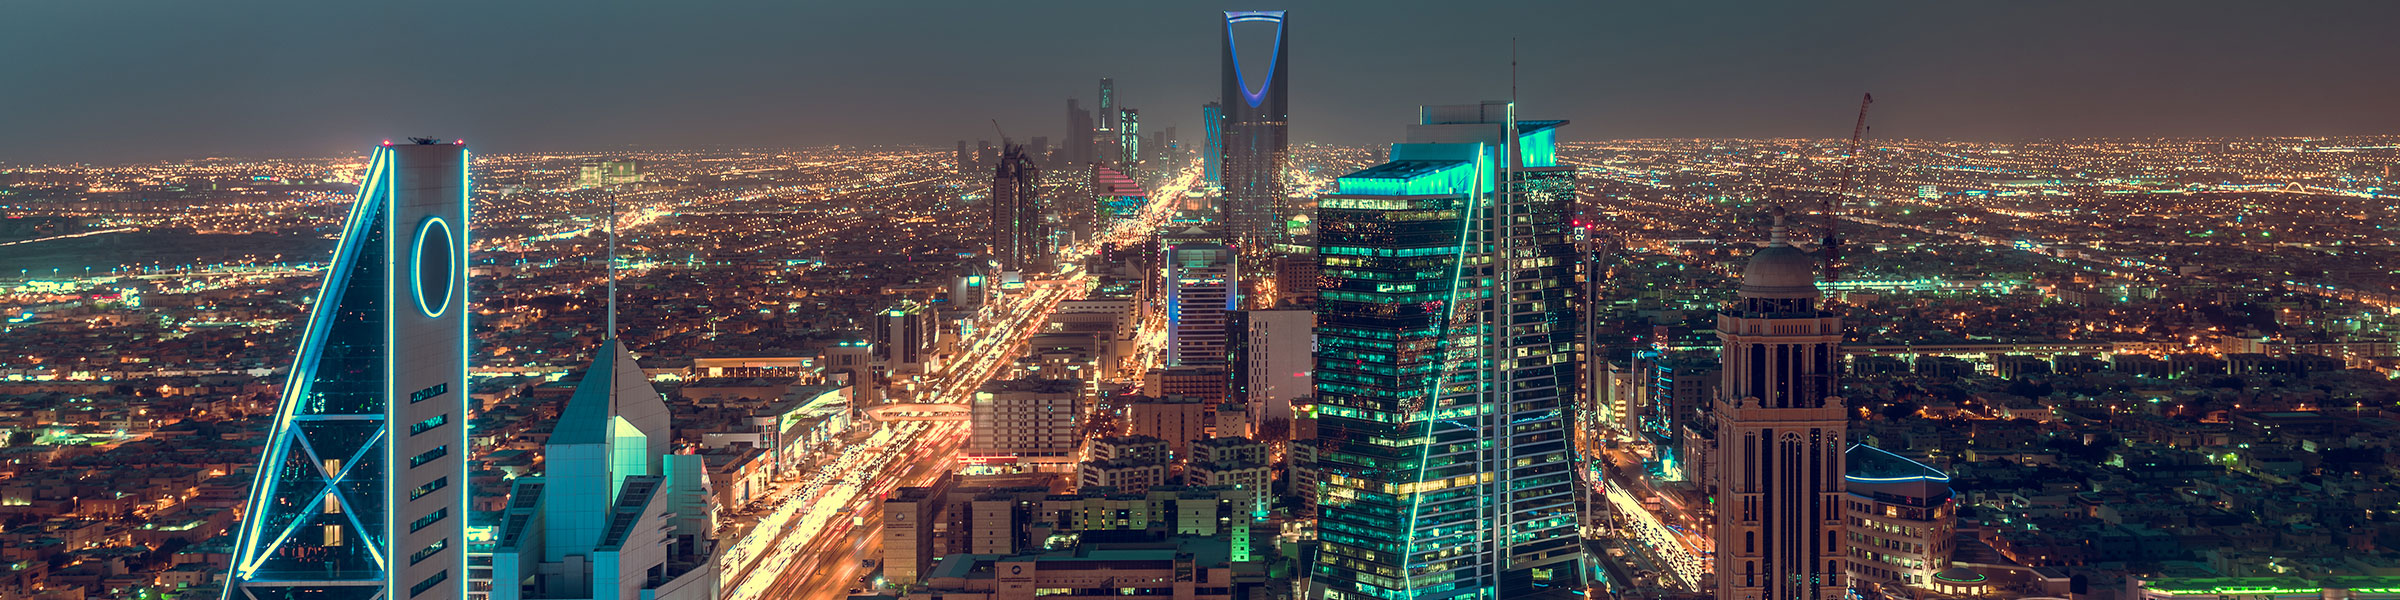 Saudi Arabia Riyadh landscape at night